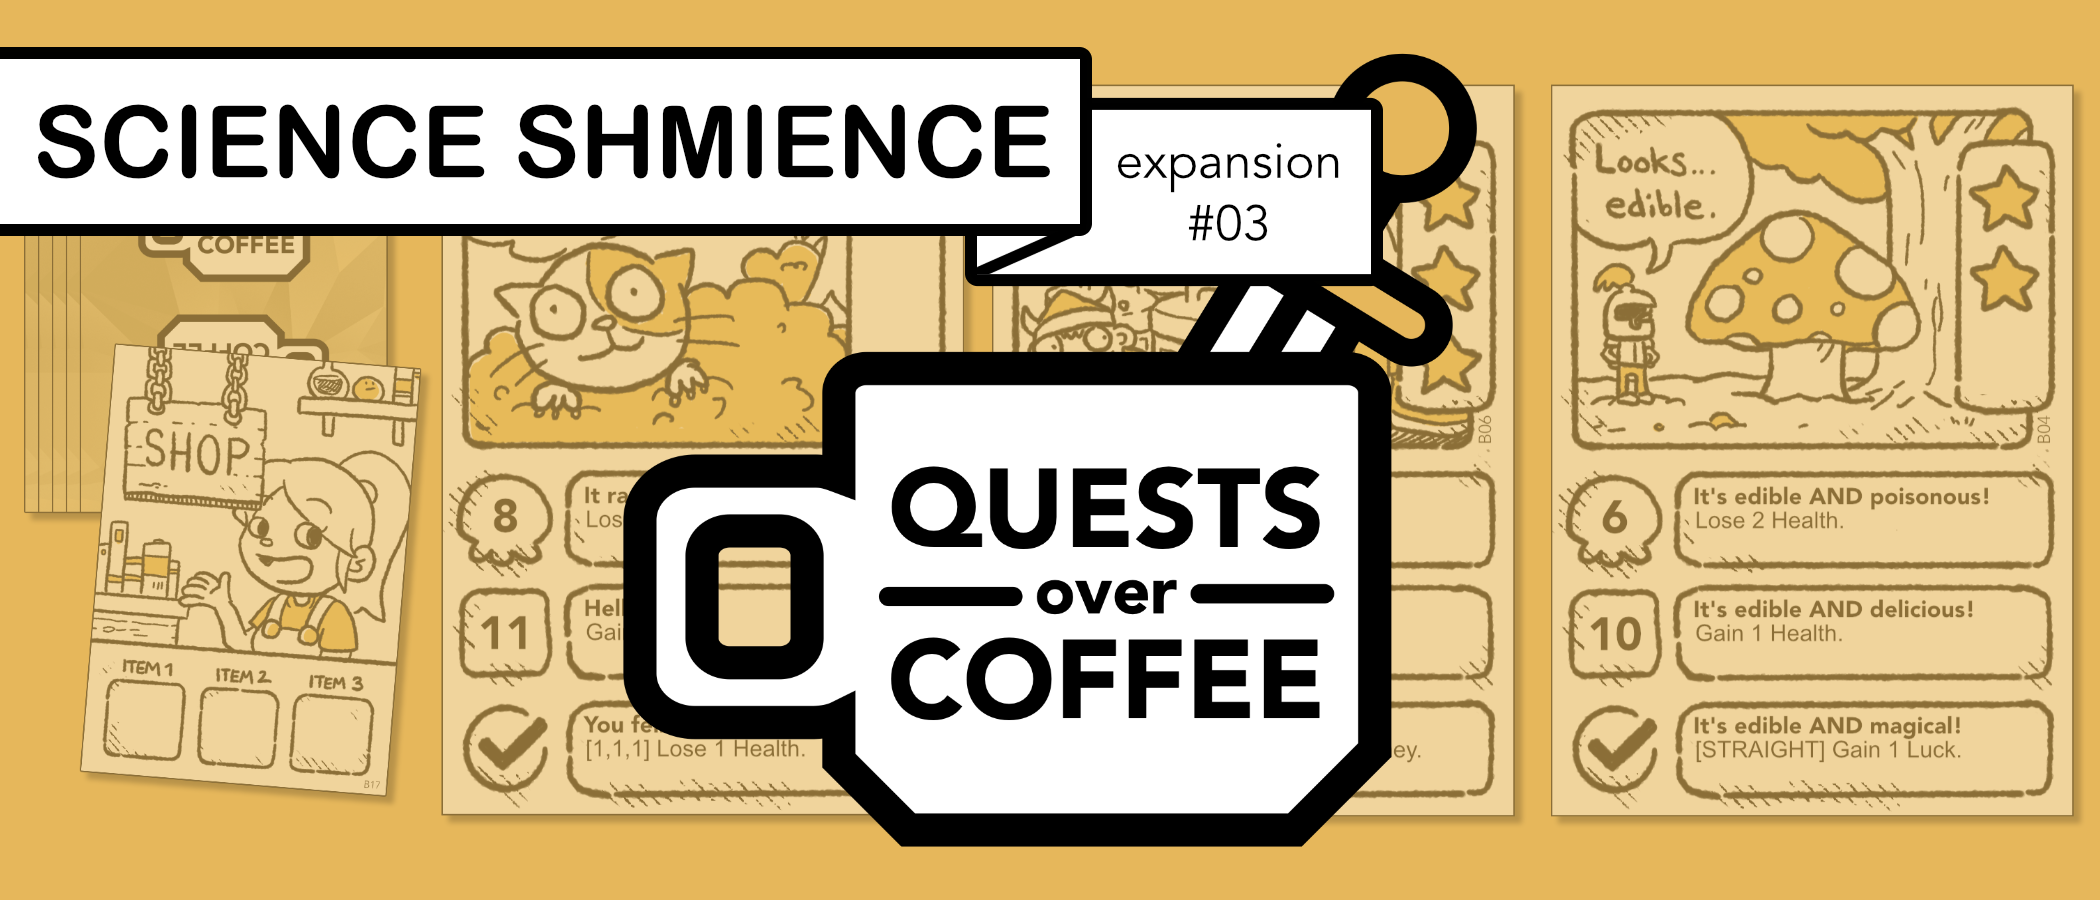 QOC Expansion: Science Shmience